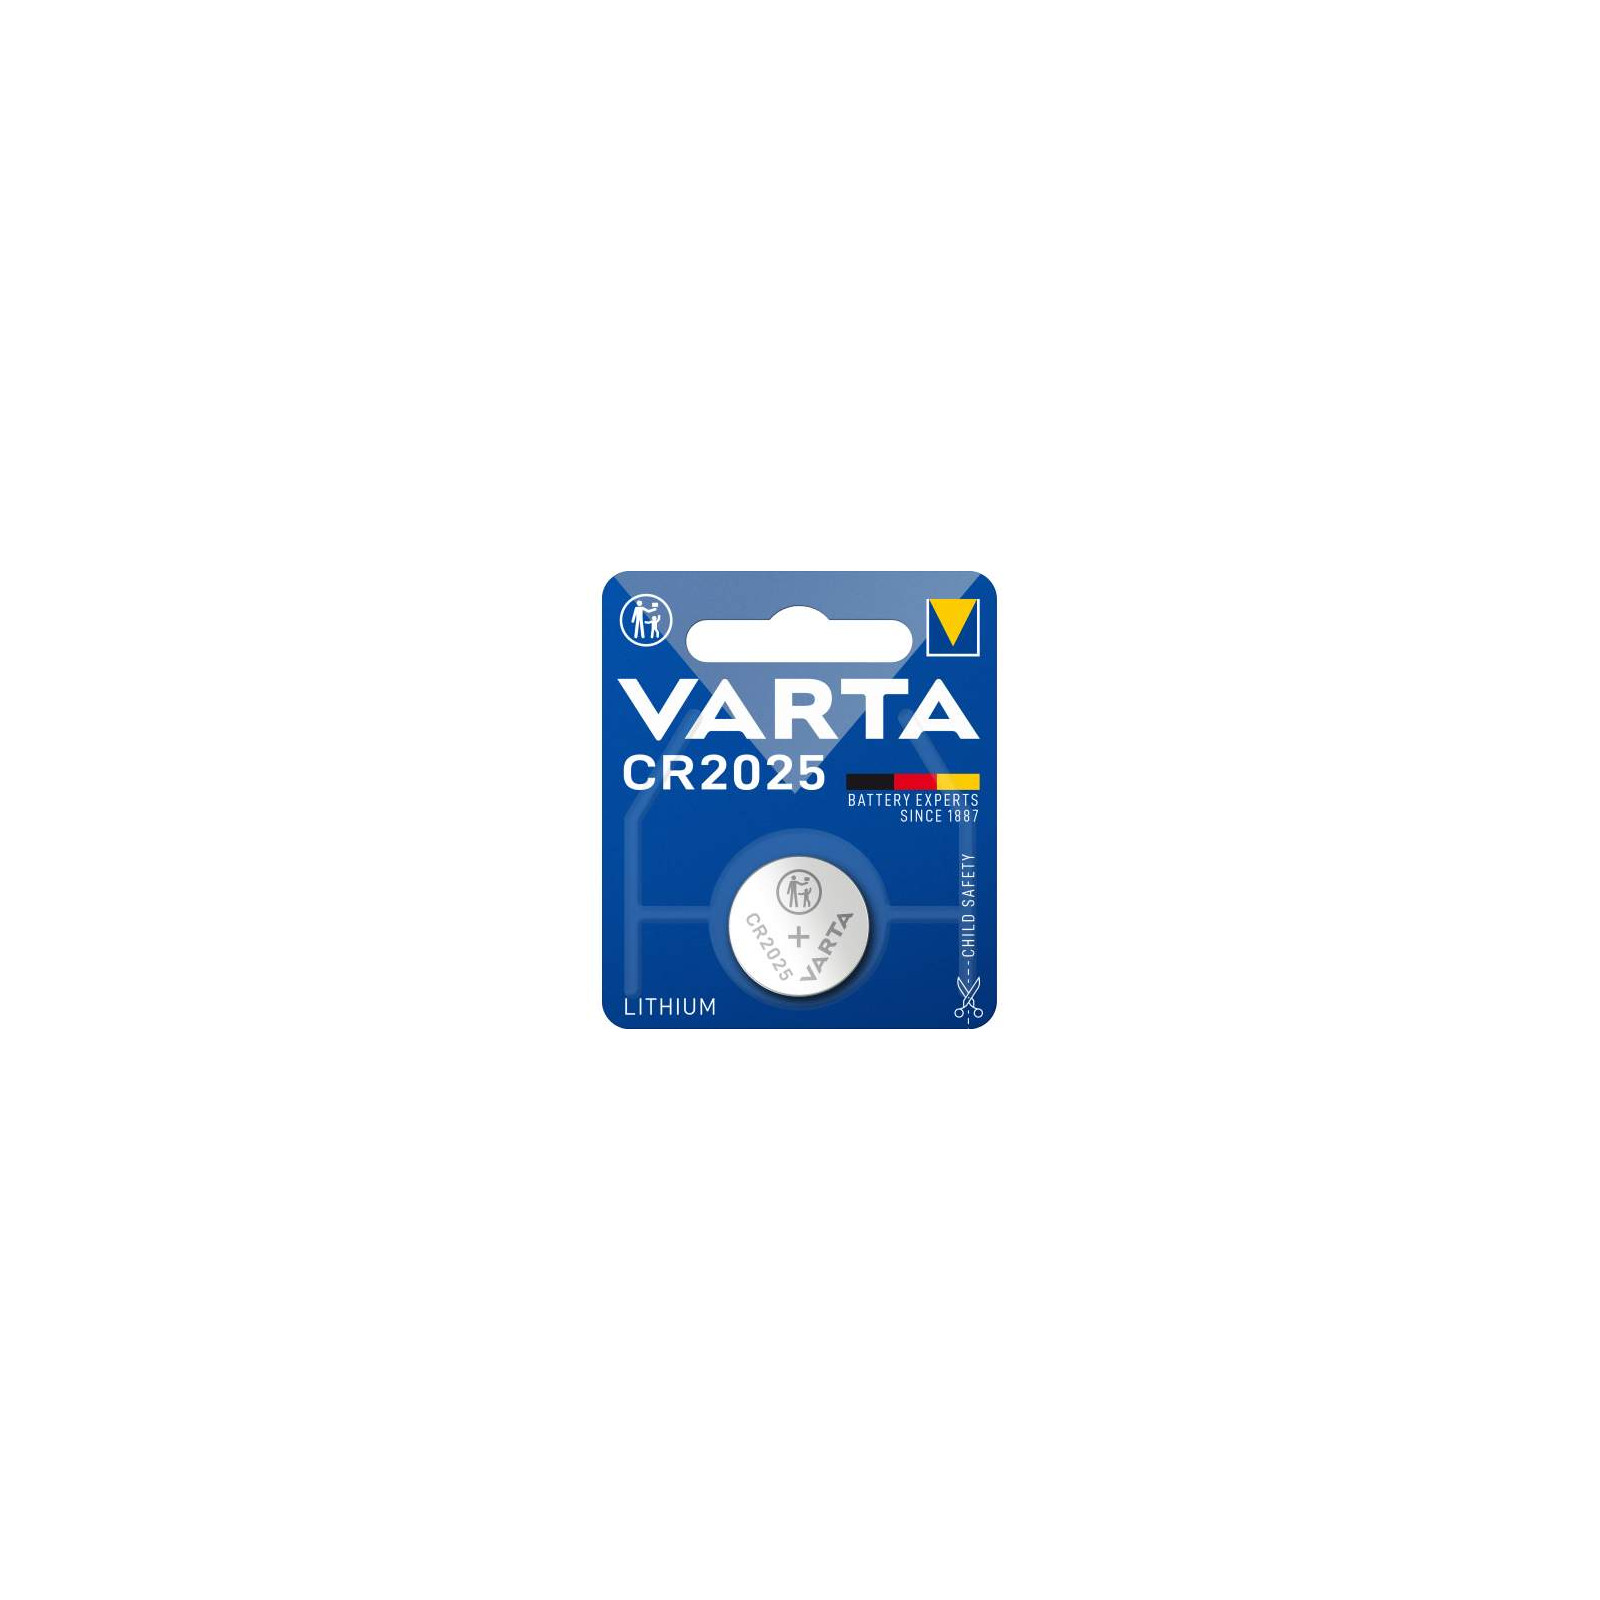 VARTA PILE CR2025 3V